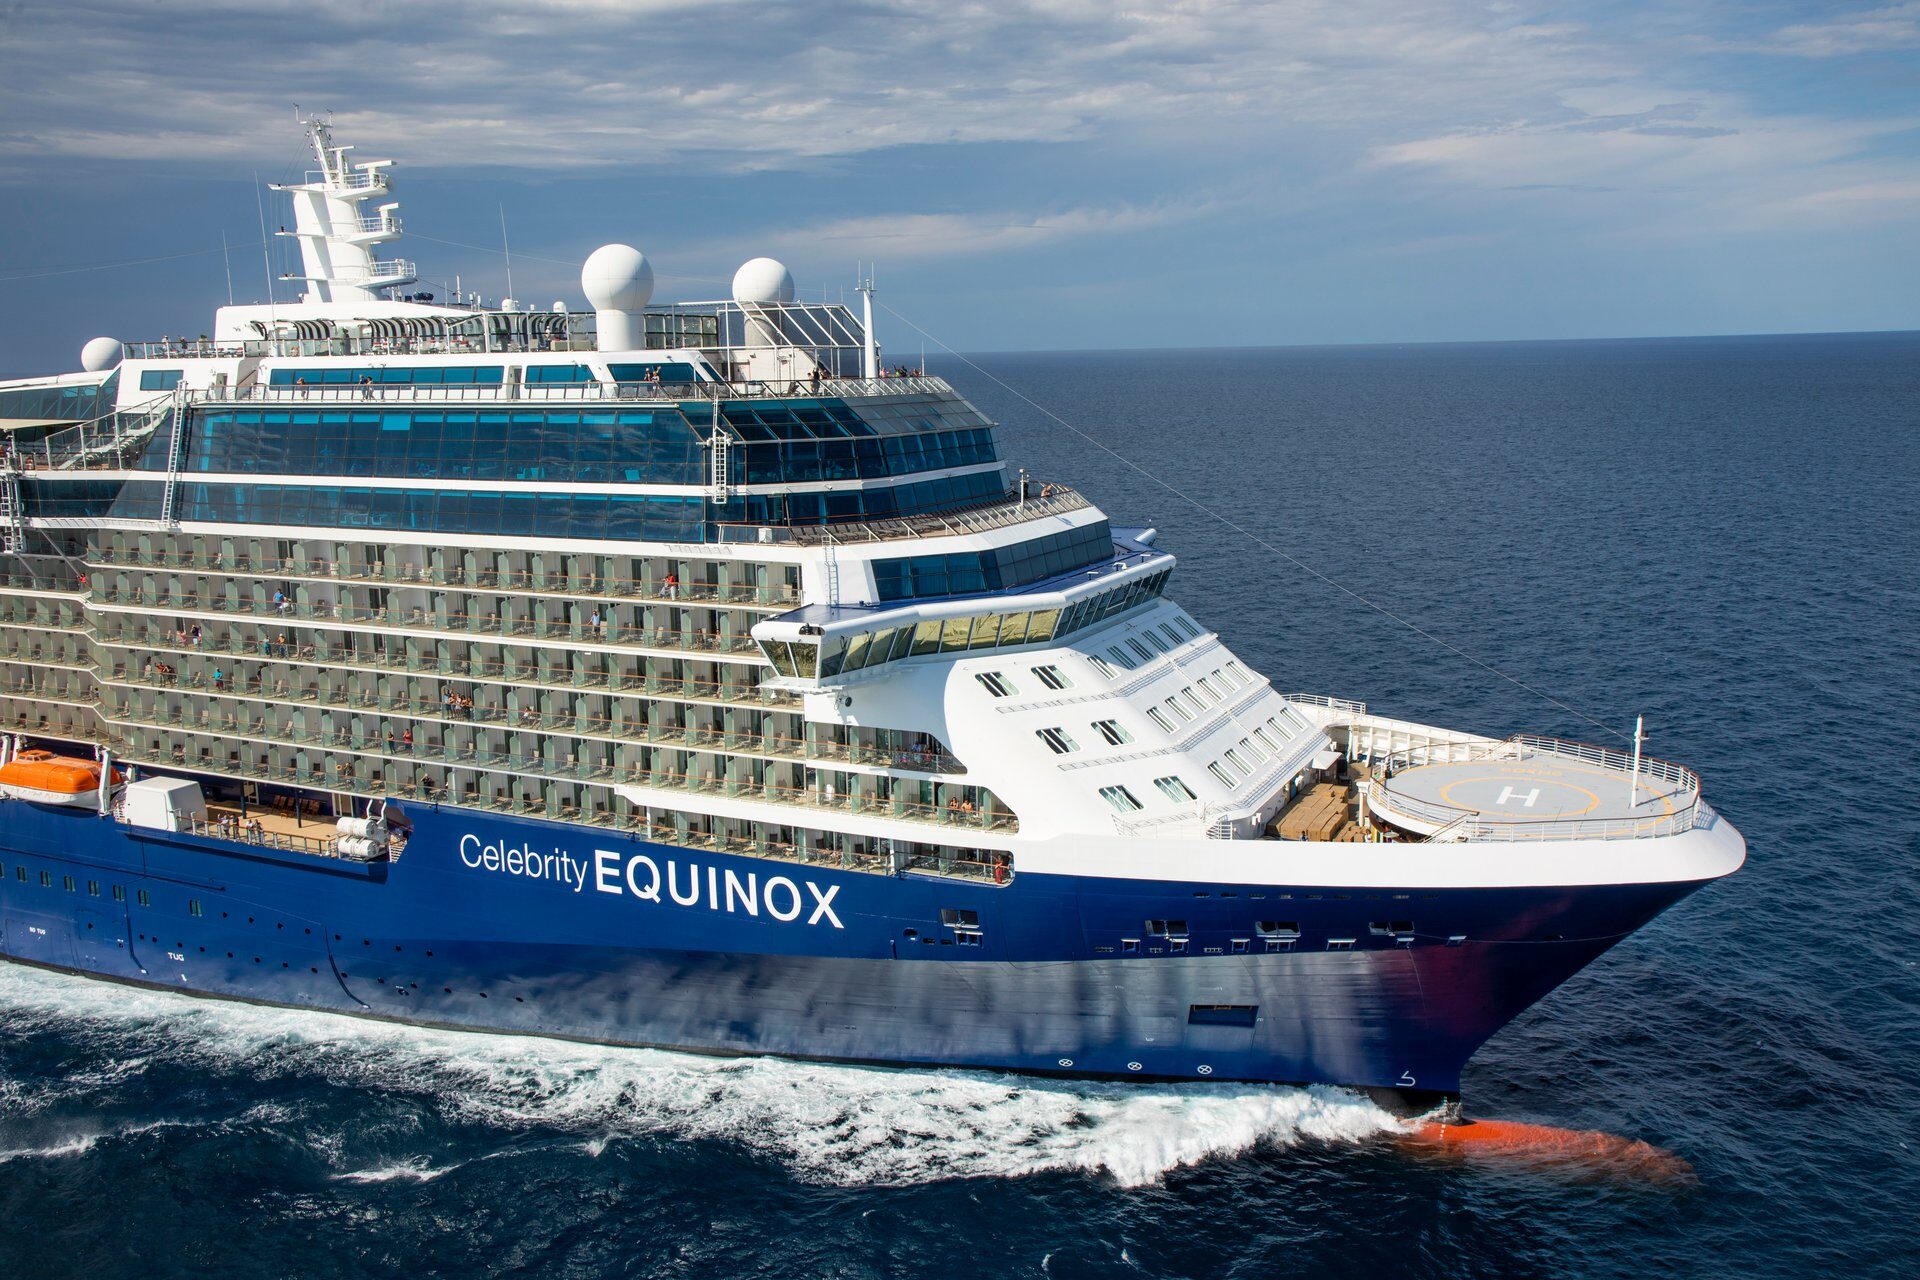 celebrity cruise line ship equinox